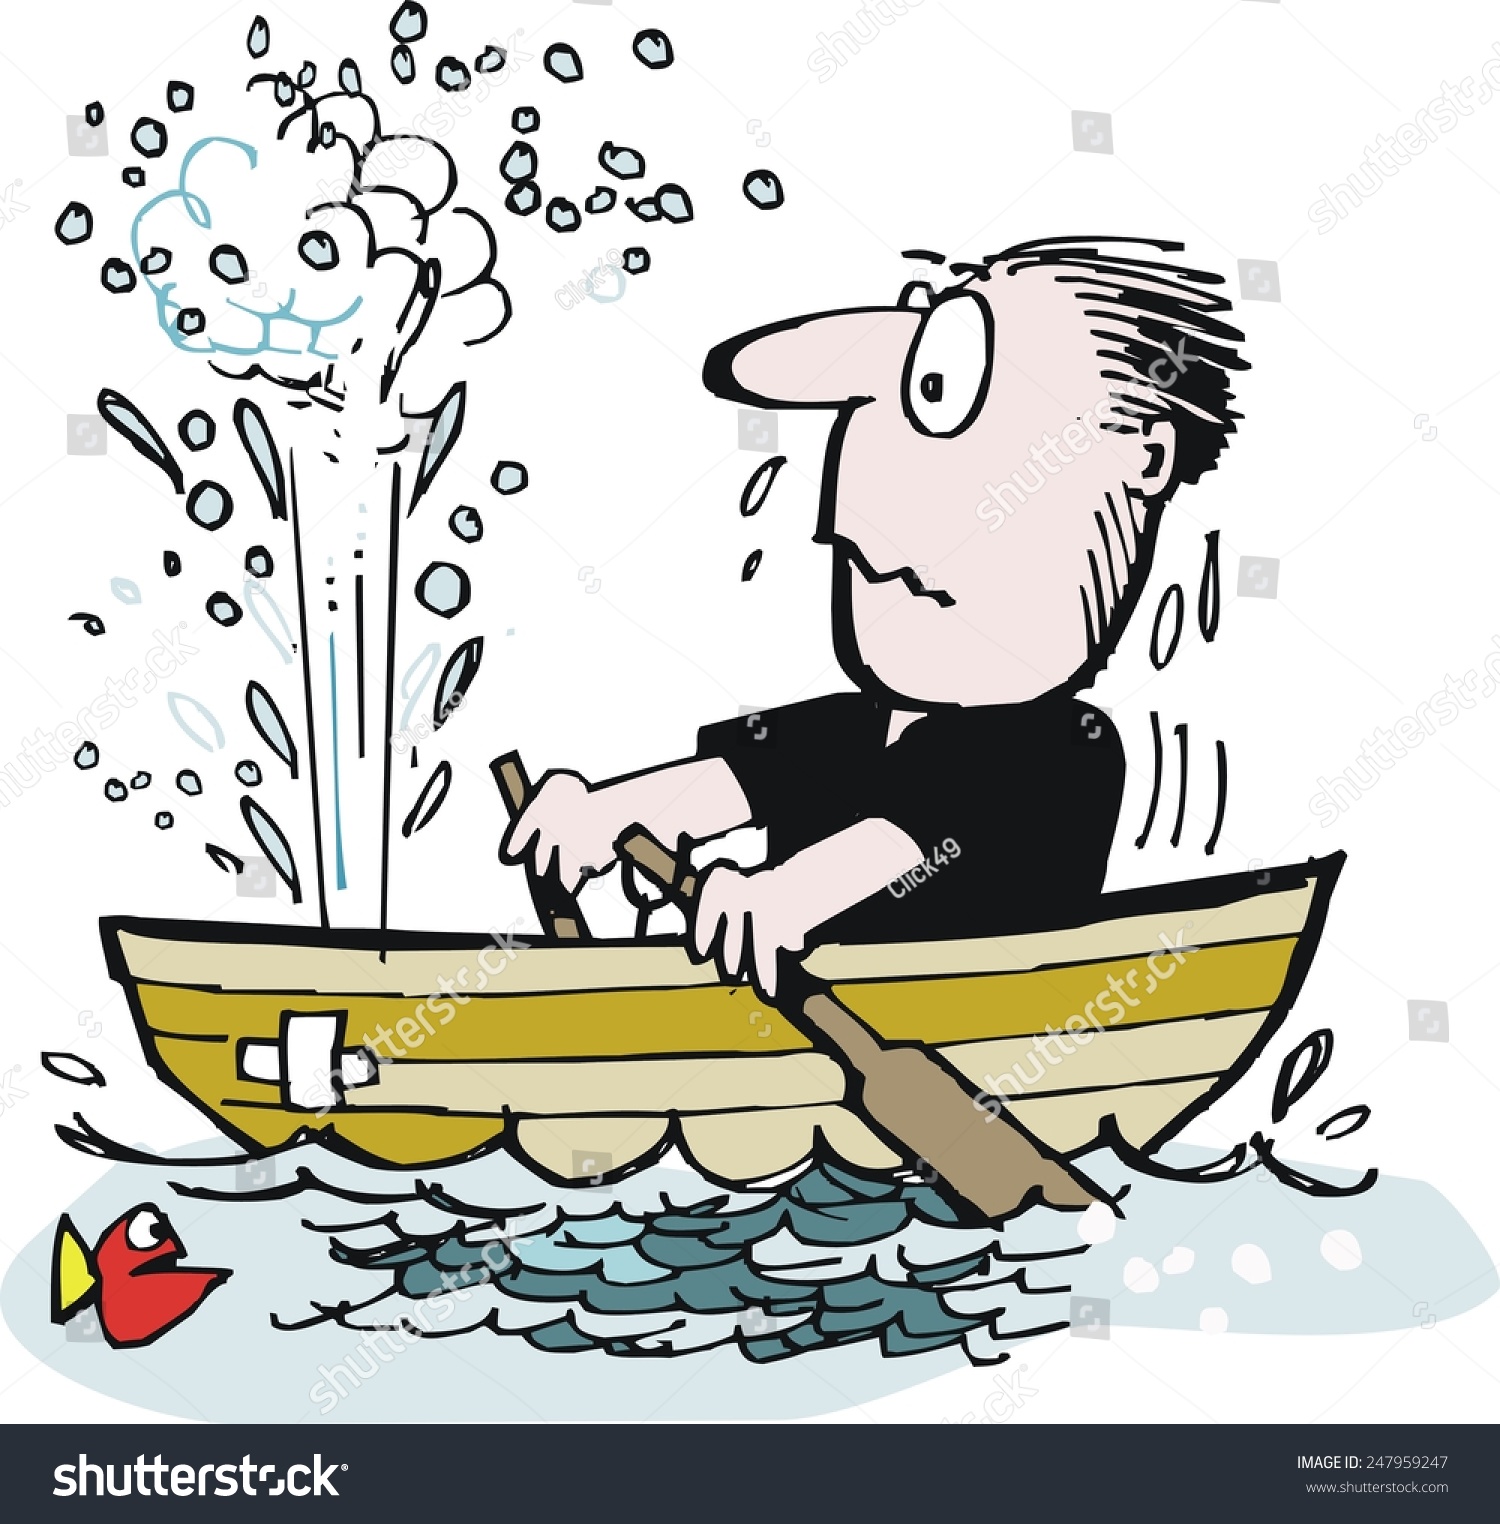 Vector cartoon of man trying to row leaky boat in ocean